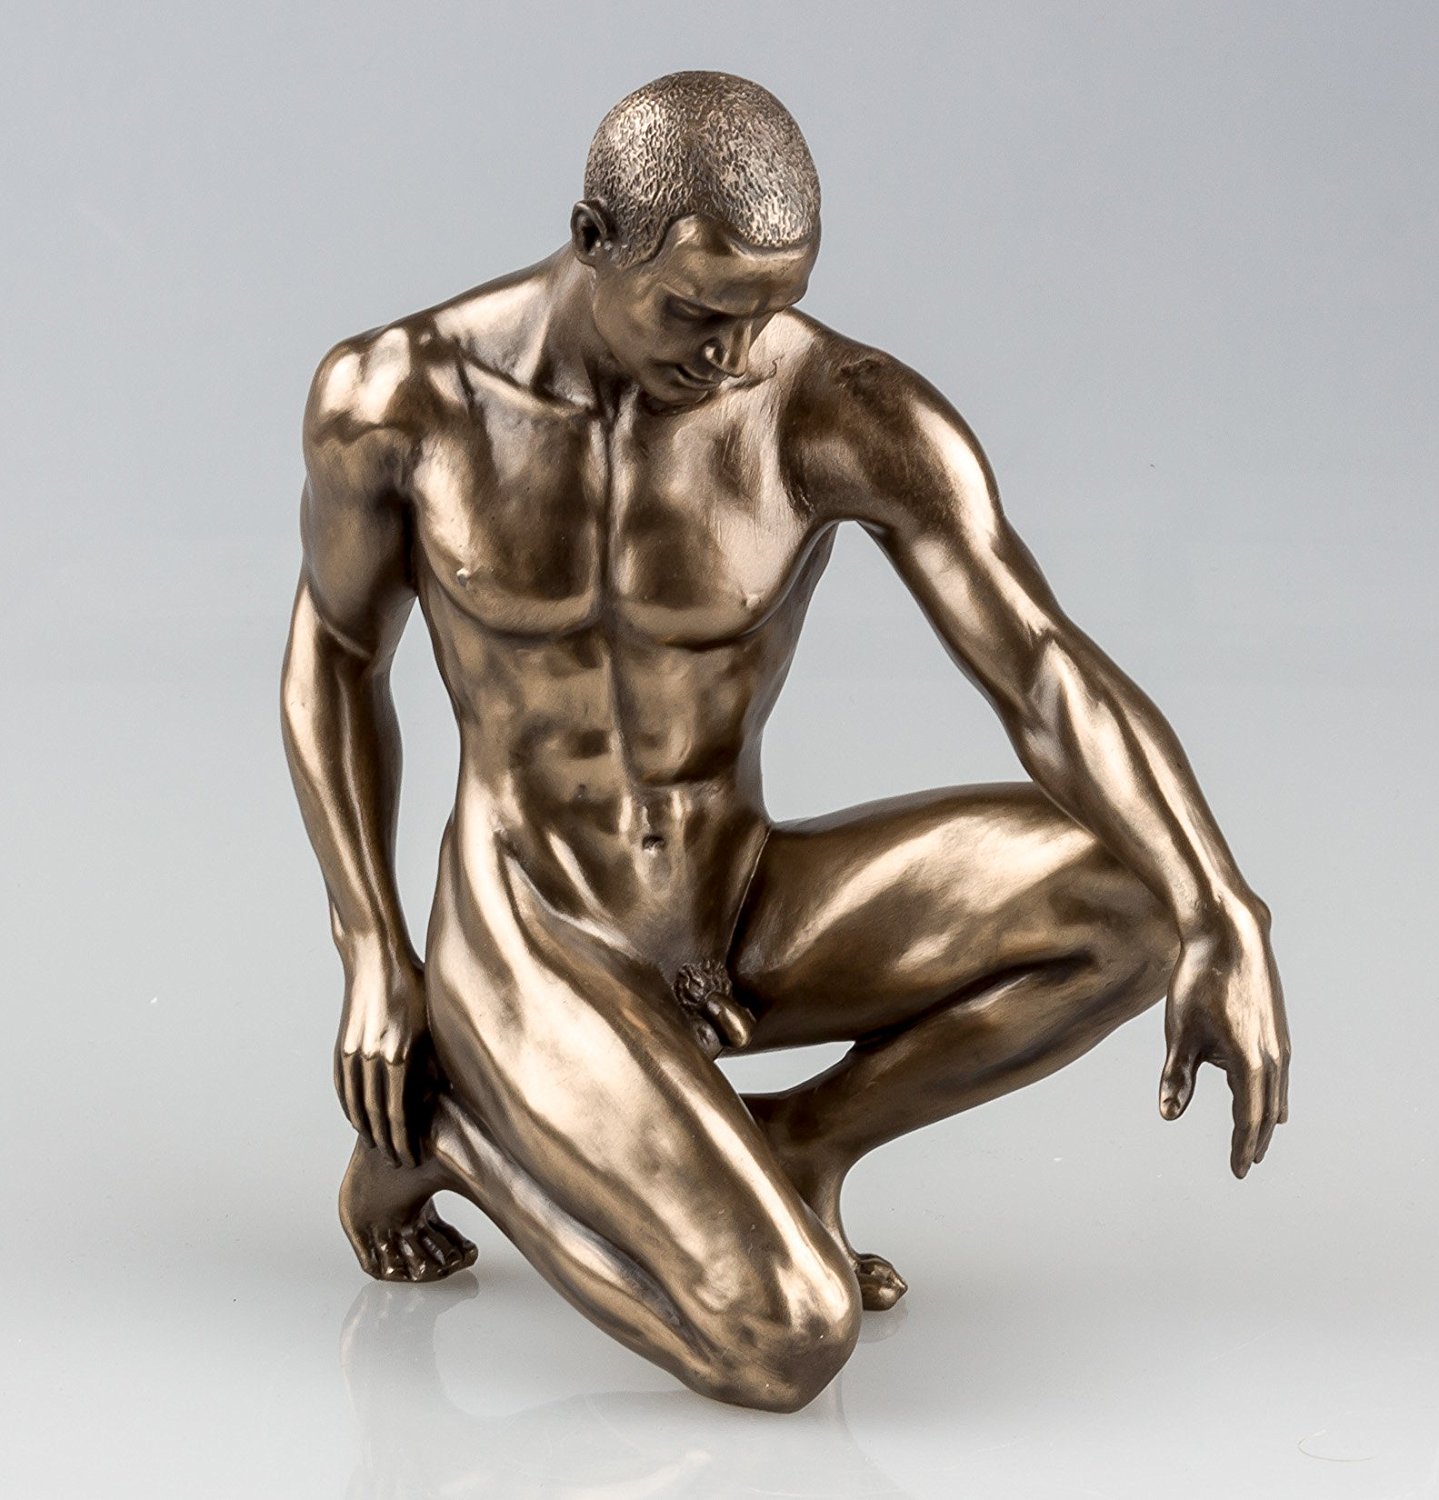 MELANCHOLY Bronze Art Nude Male Sculpture NEW Gay Int.: Amazon.co.uk ...